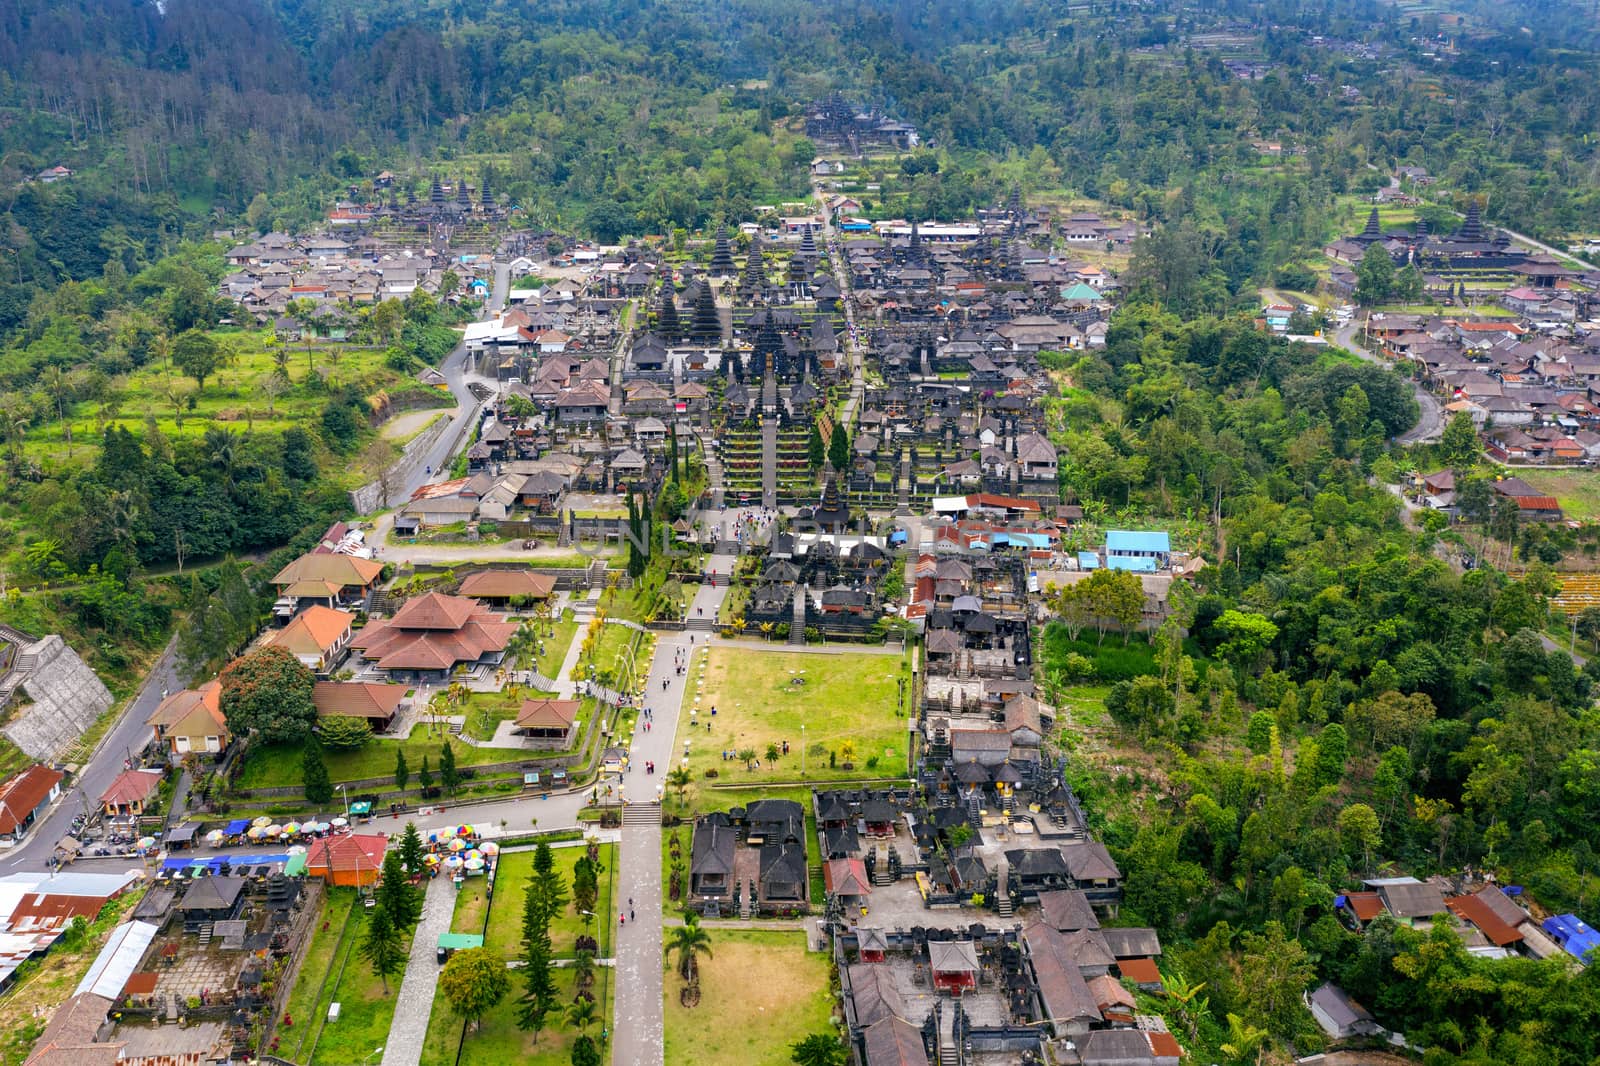 Aerial view of Besakih temple in Bali, Indonesia.